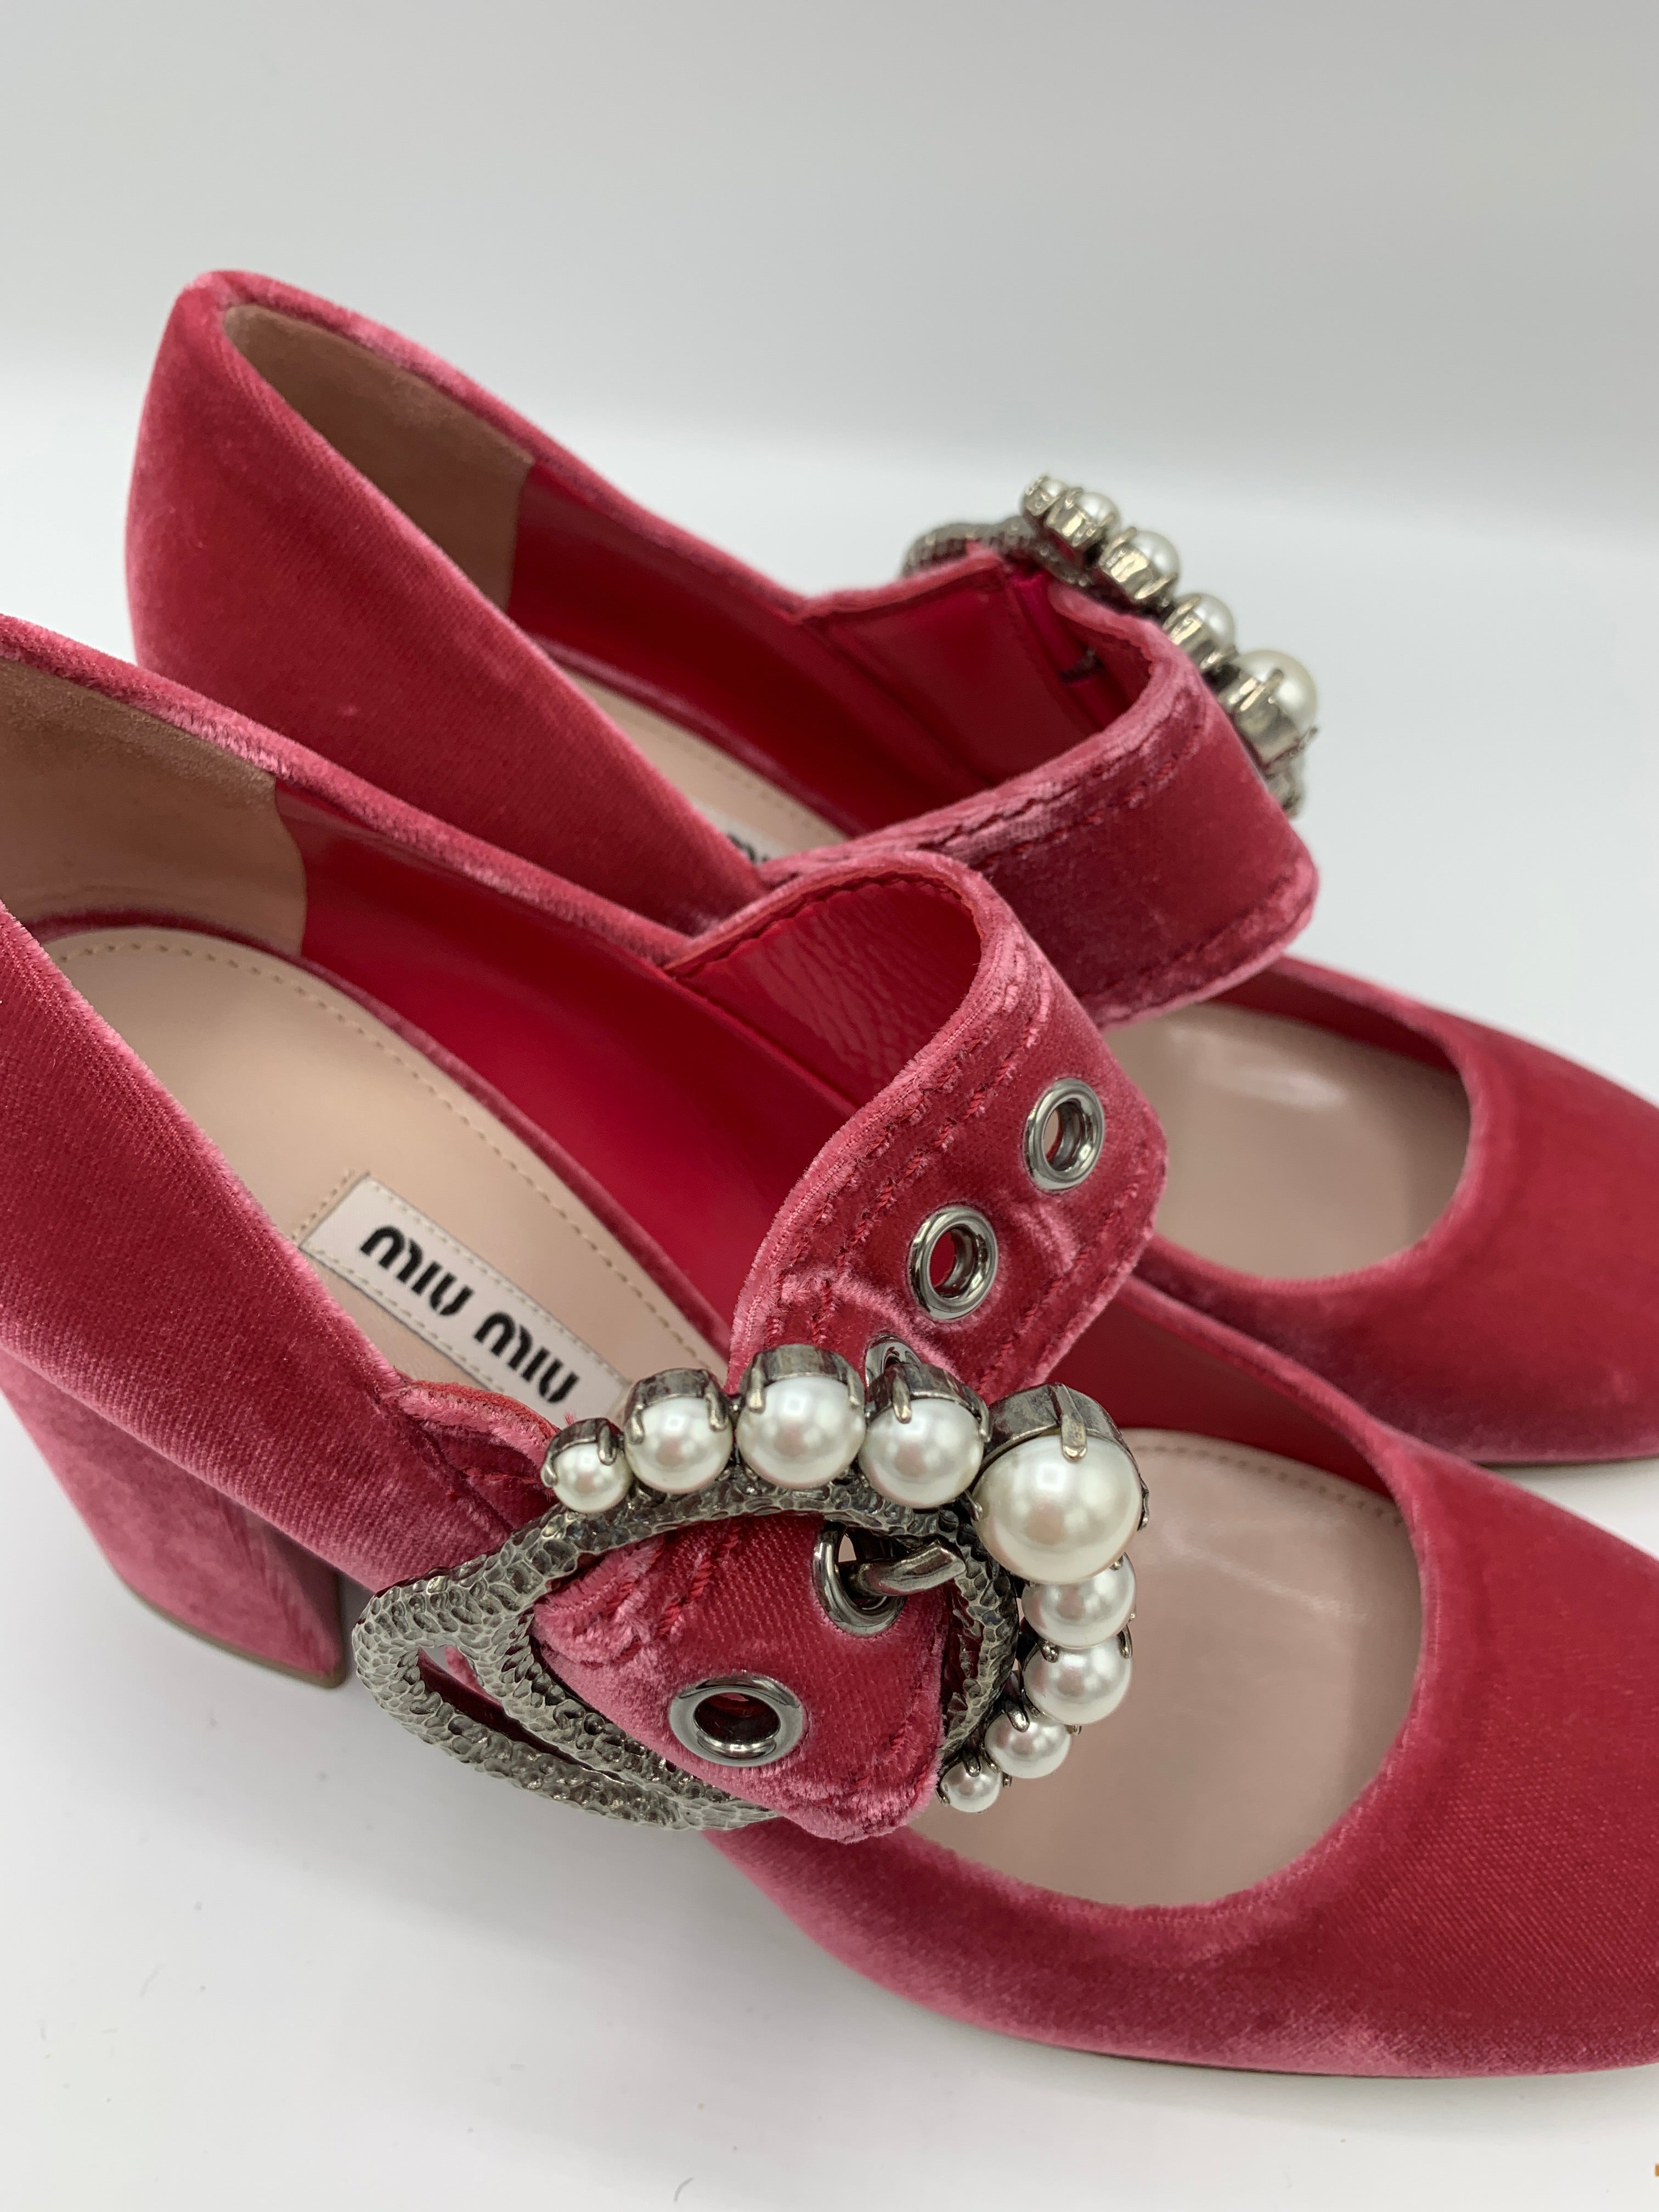 Miu Miu embellished velvet Mary Janes court shoes